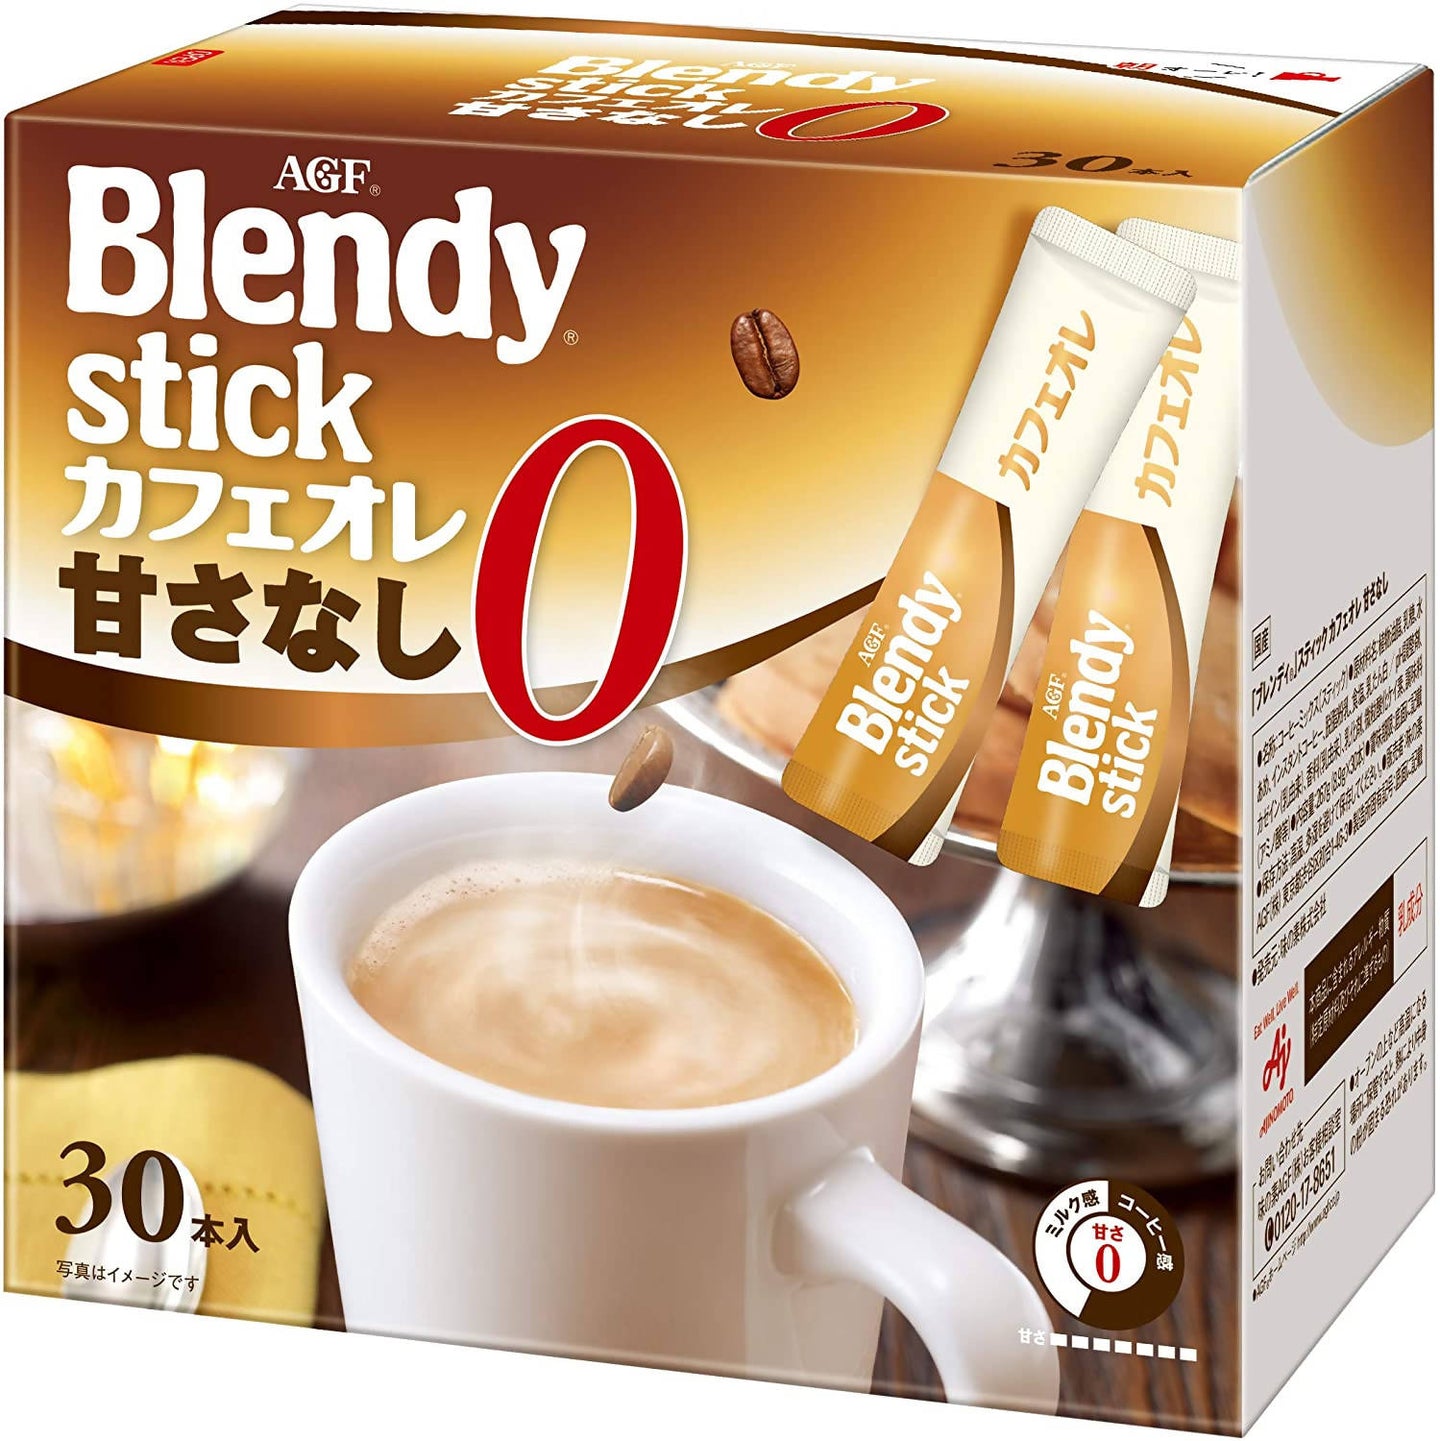 Blendy Stick Unsweetened Cafe au Lait – 30 Sticks x 4 Boxes – Value Pack